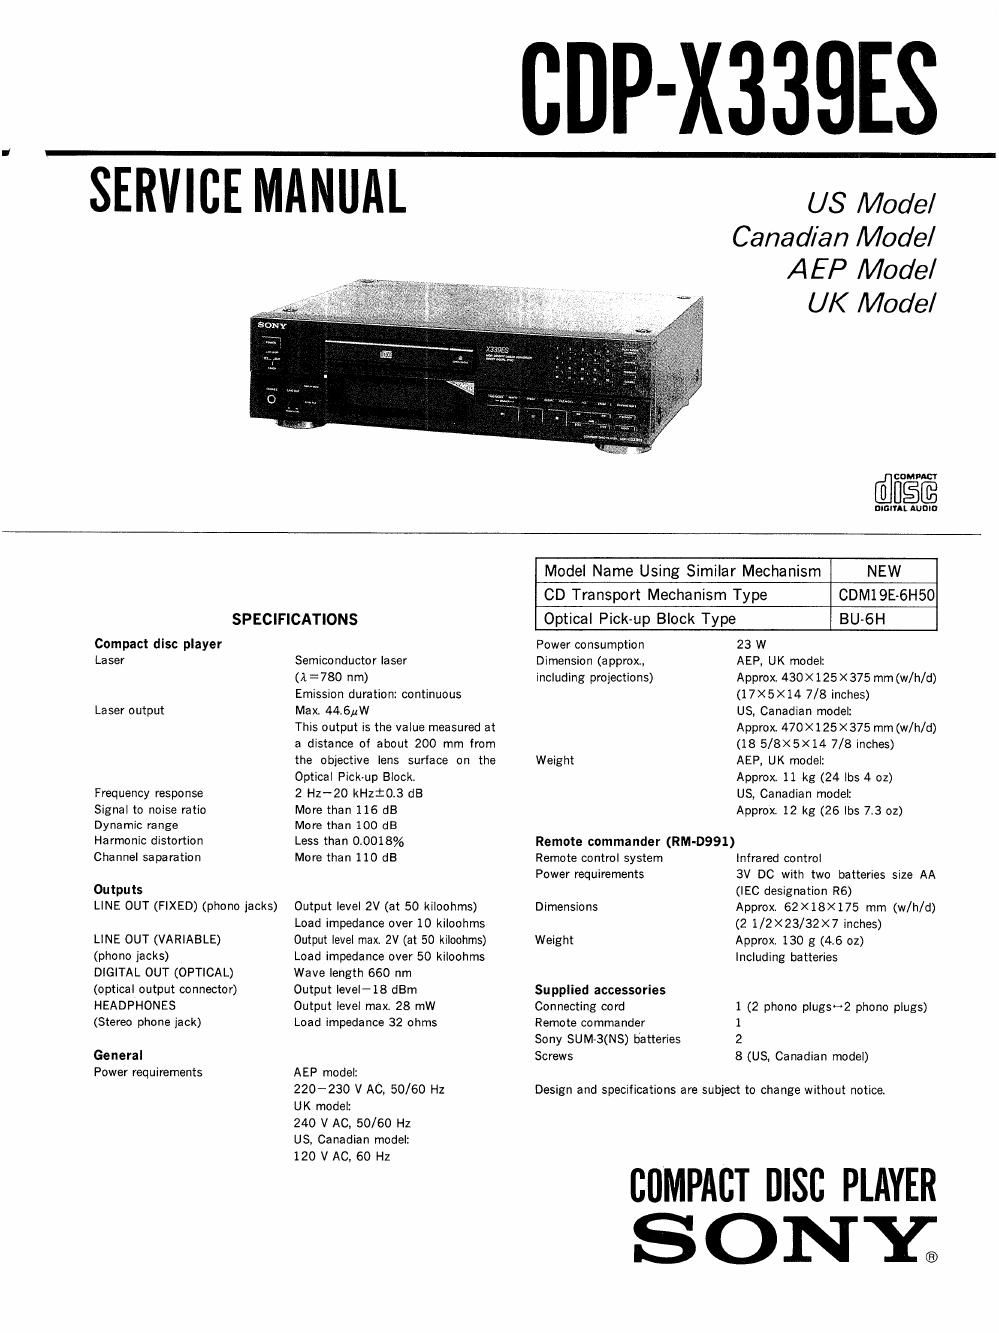 sony cdp x339es service manual